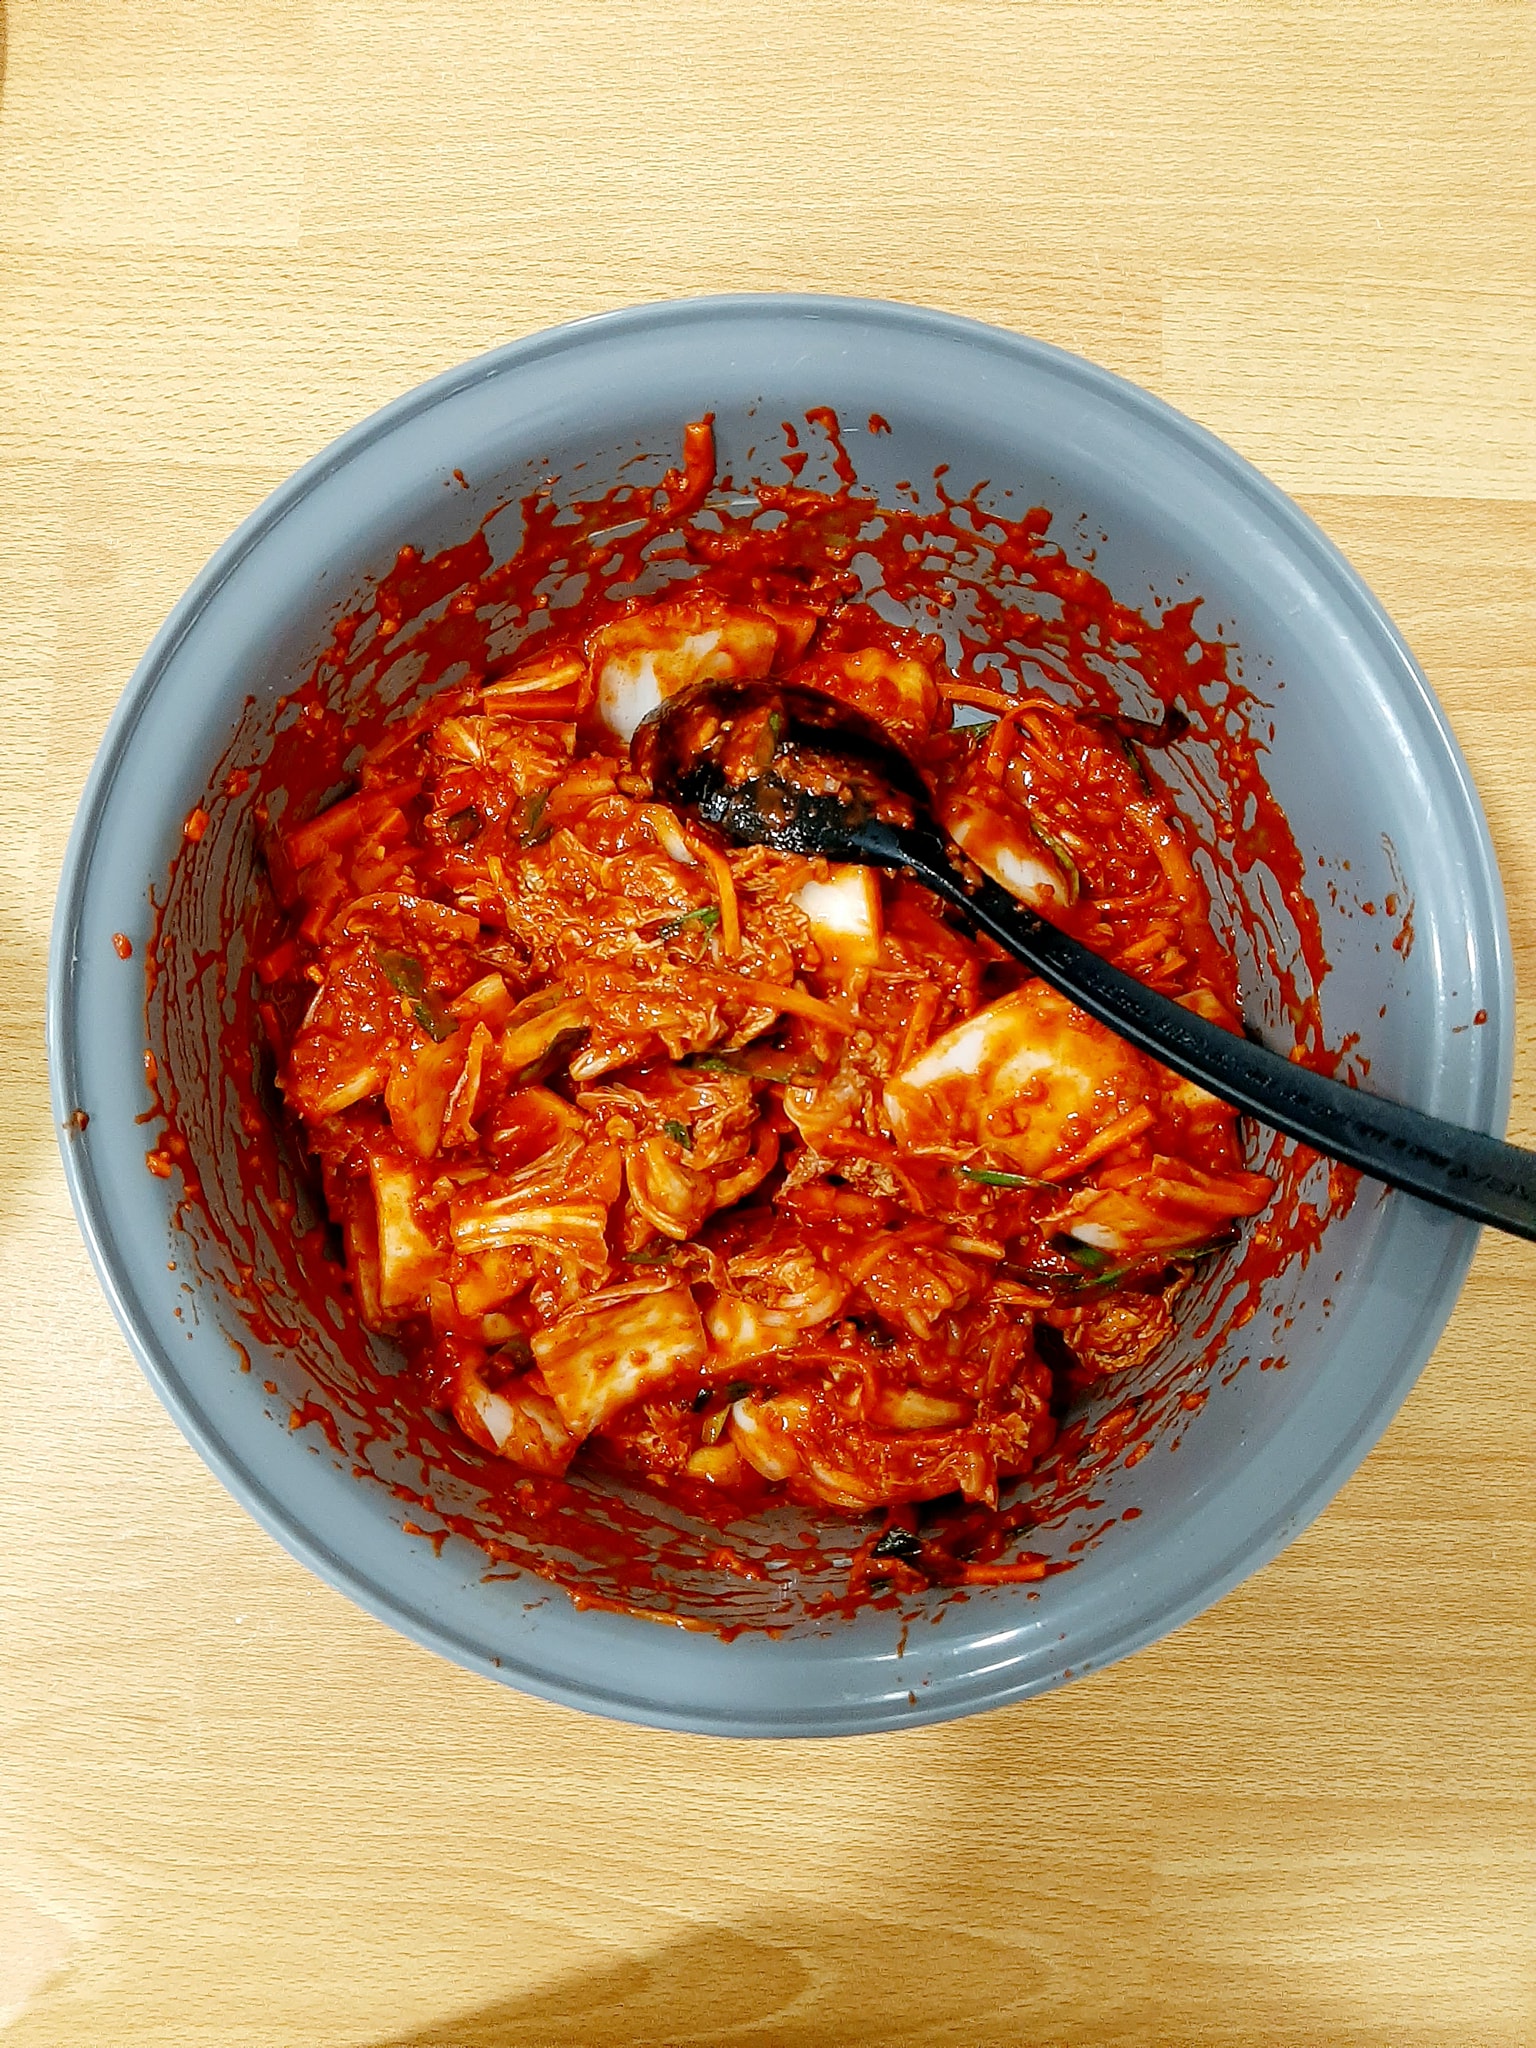 Resipi Kimchi Homemade Paling Mudah, Yang Penting Halal &#038; Sedap